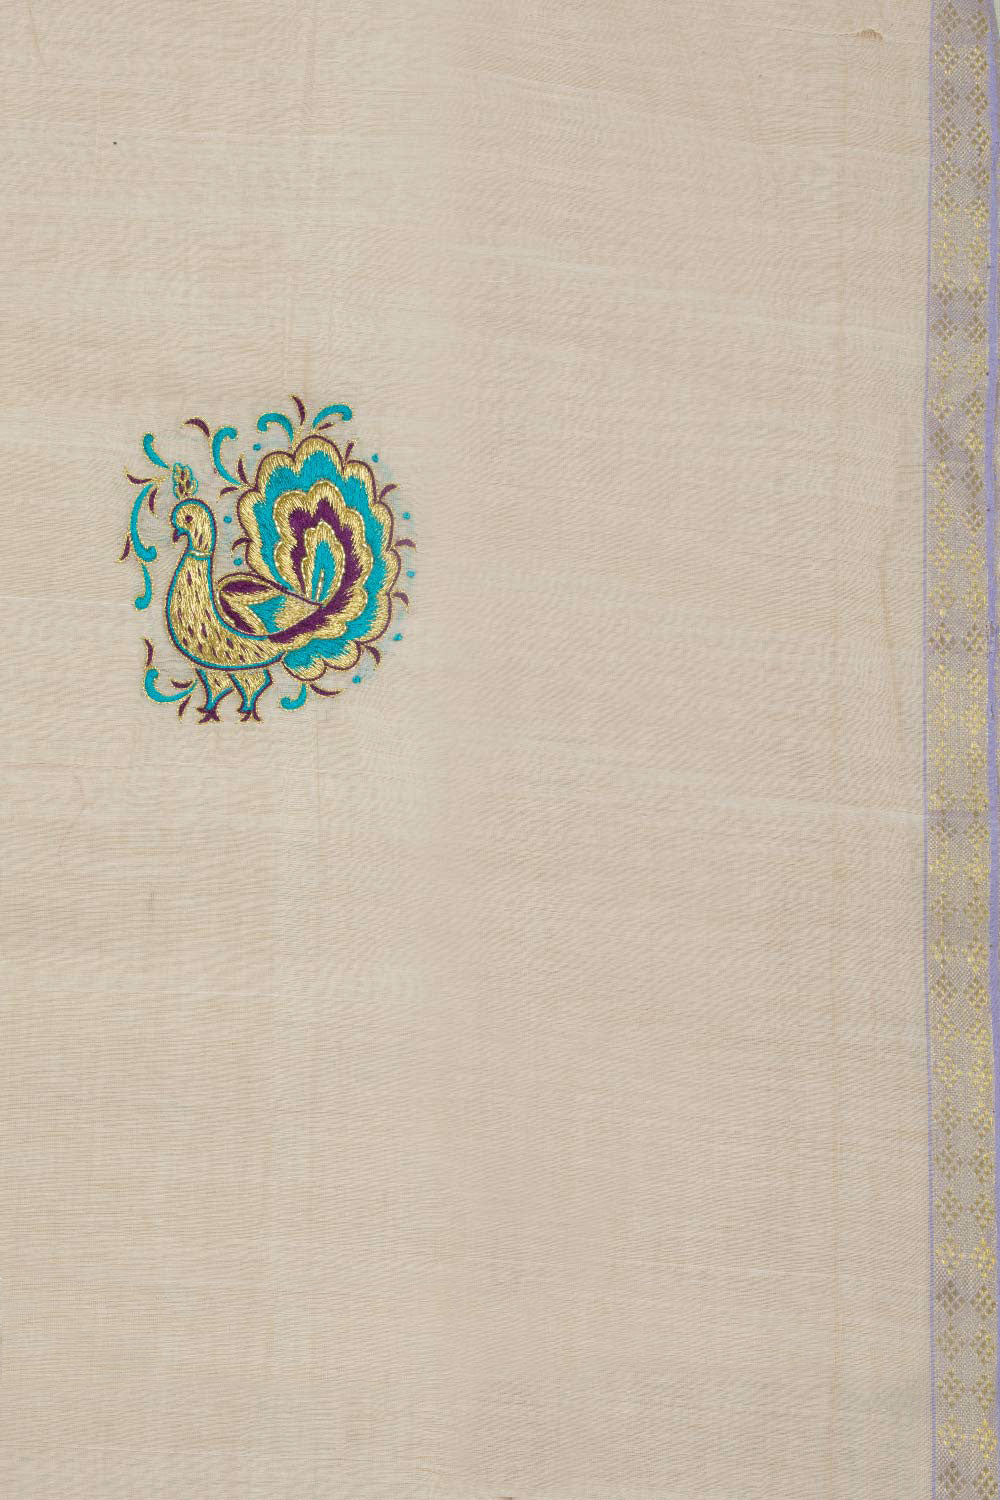 Off White Aari Embroidered Mangalgiri Cotton Blouse Material 10062420